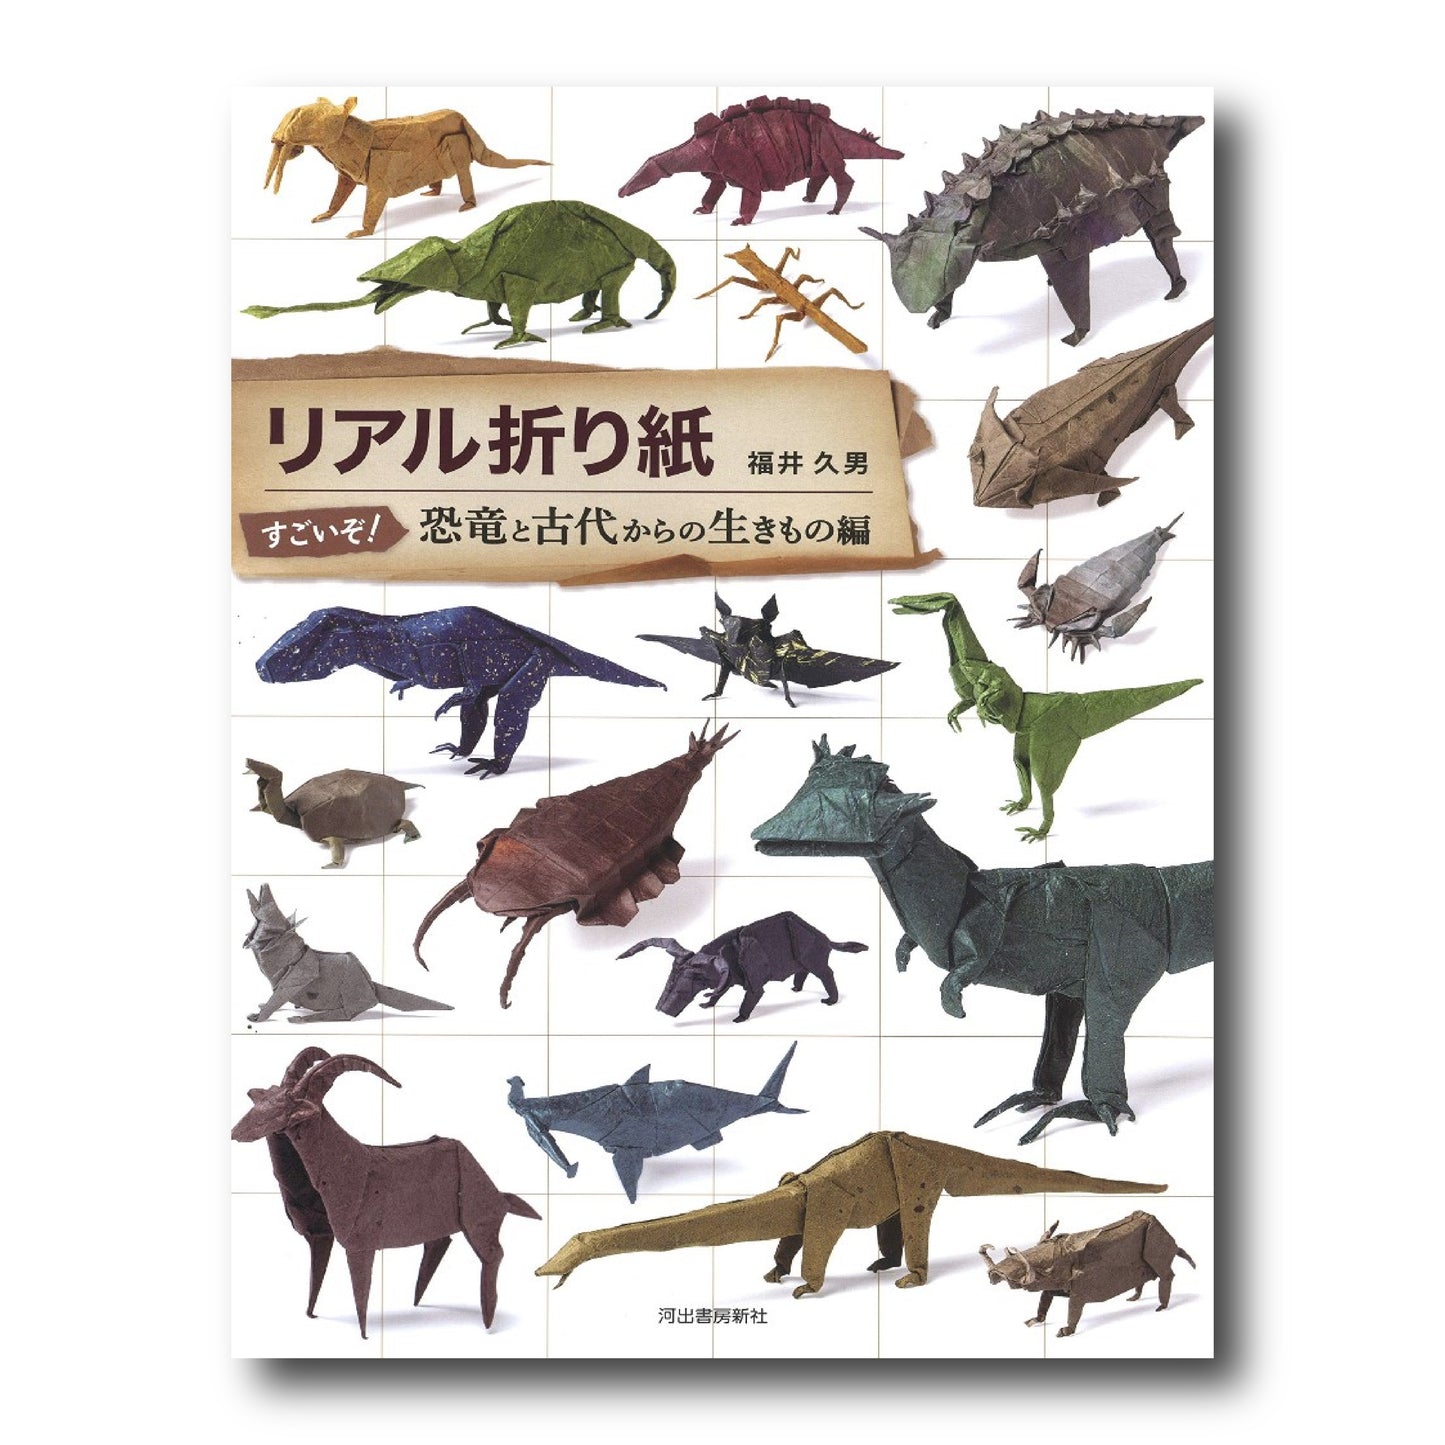 Realistic Origami: Dinosaurs and Ancient Creatures Edition/リアル折り紙 すごいぞ! 恐竜と古代からの生きもの編